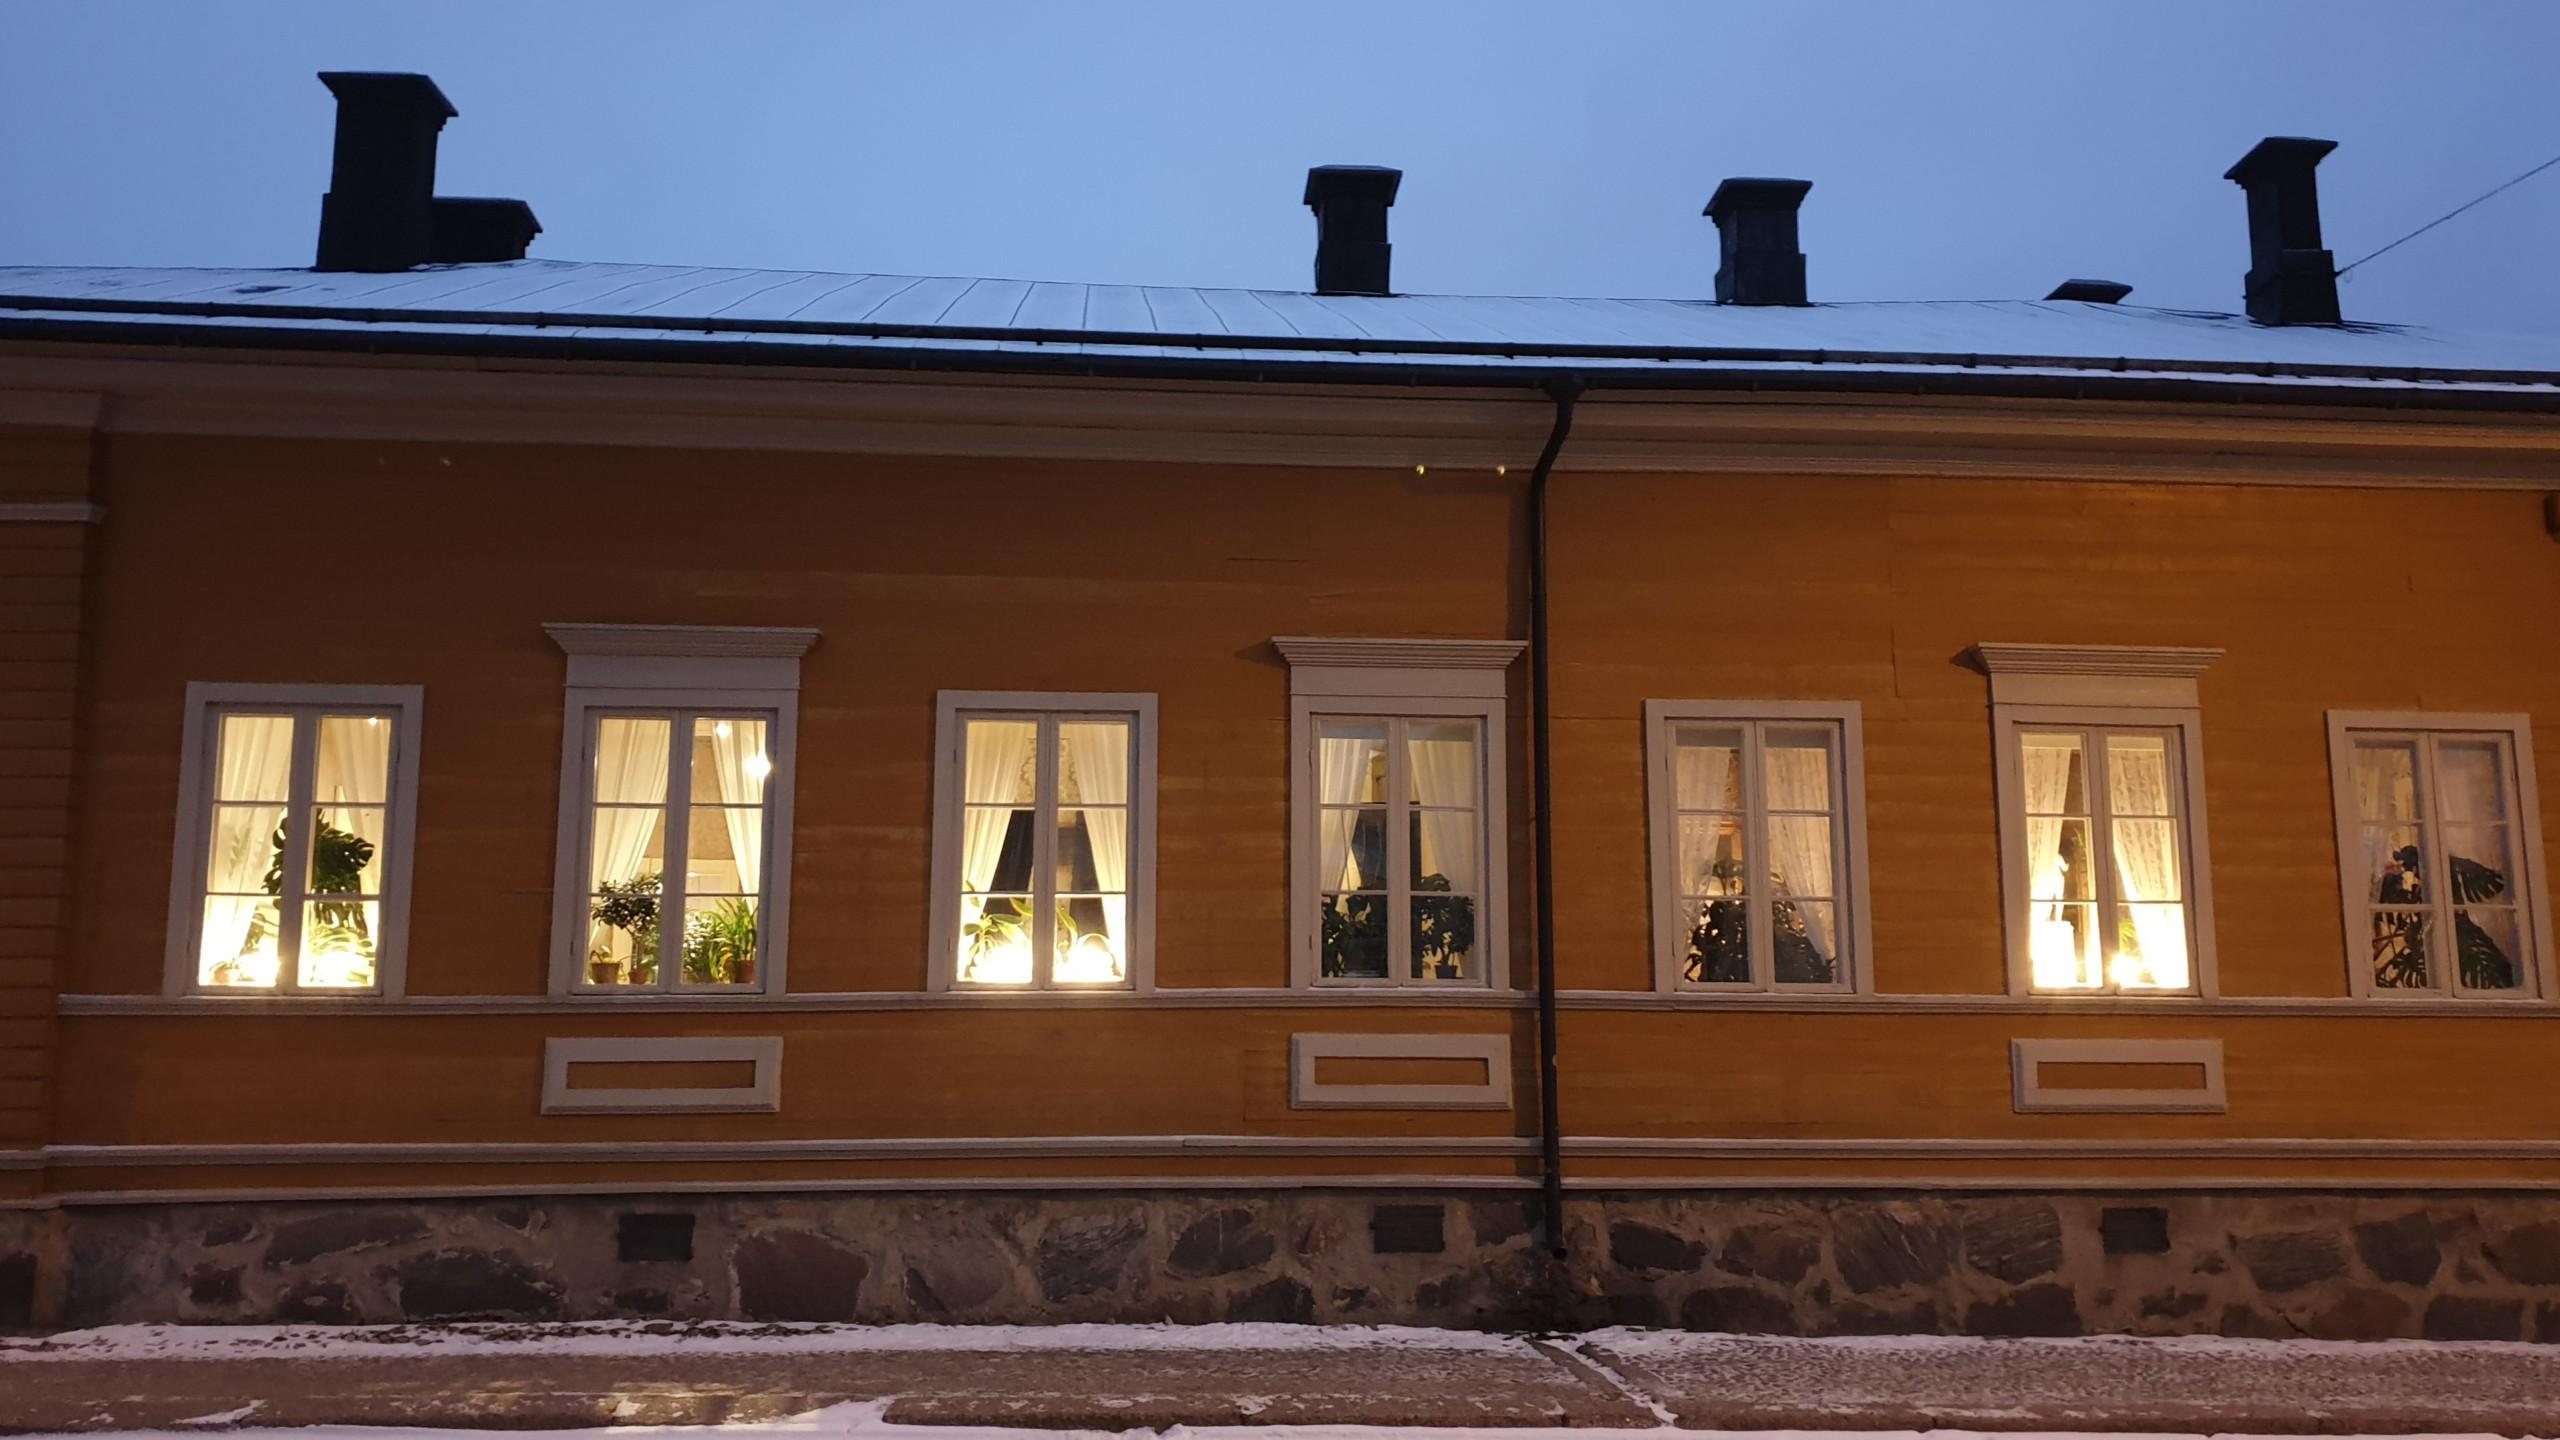 Runebergin koti talvella